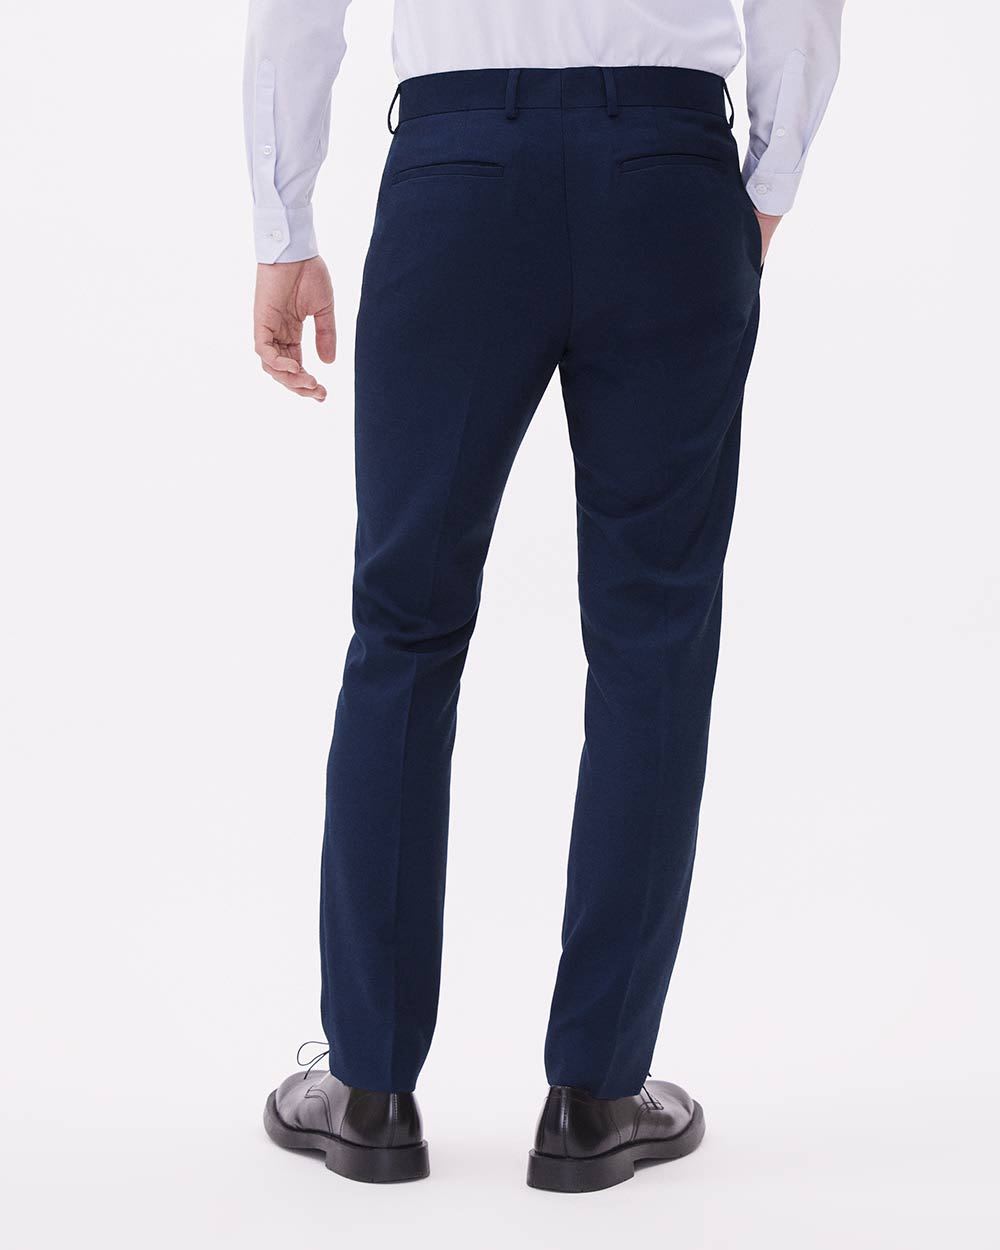 Essential Slim Fit navy suit pant | RW&CO.